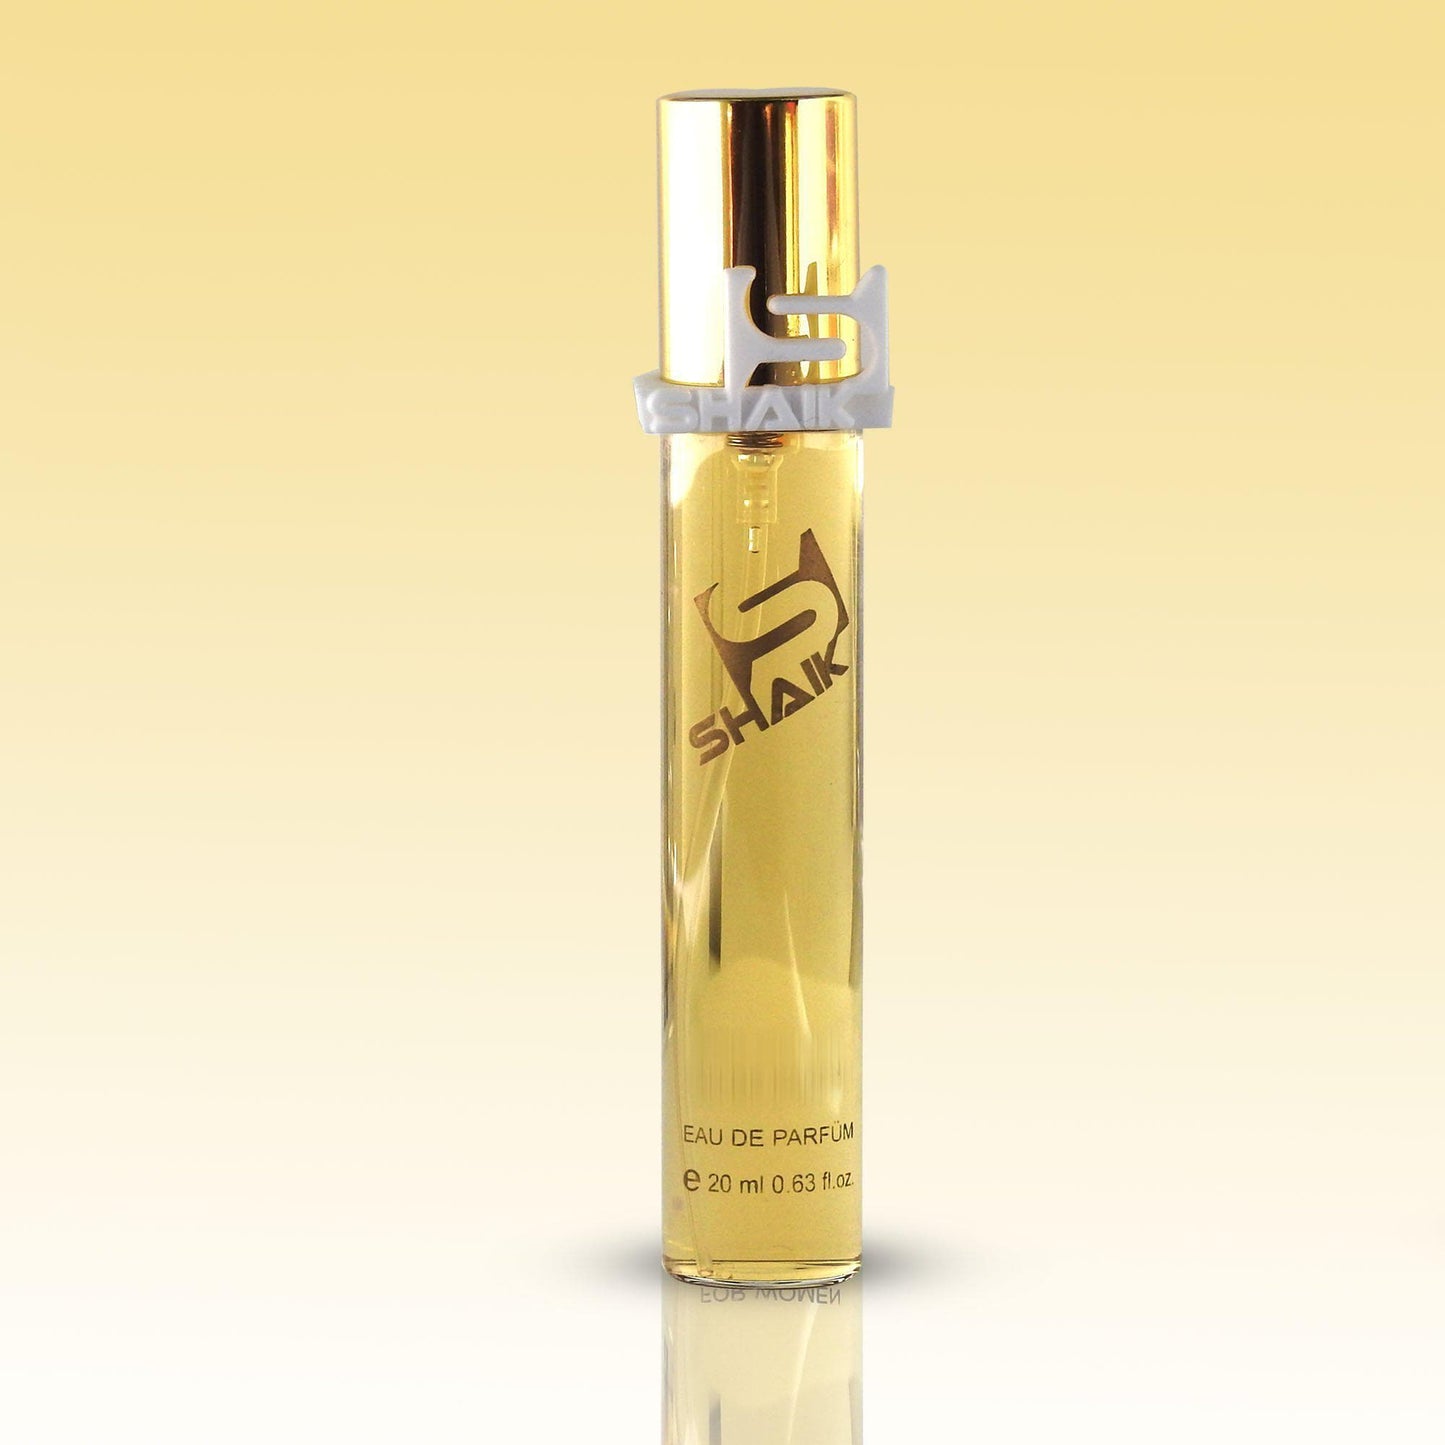 Shaik - 165 - Bergamot, Cedaarwood, Woody - Shaik Perfume